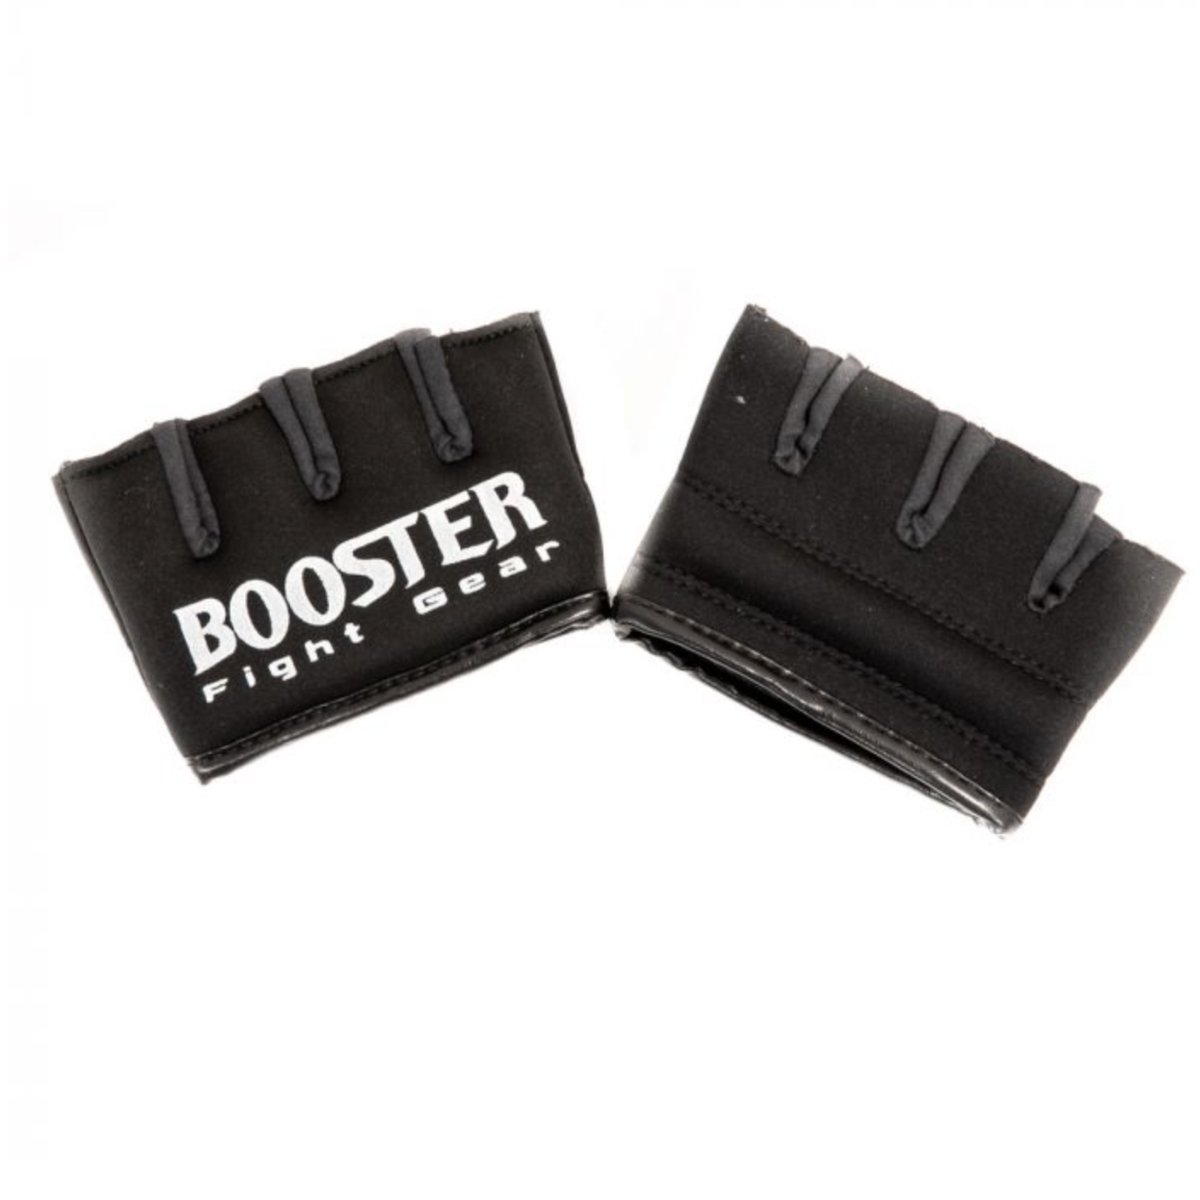 Booster - Gel knuckle protecter